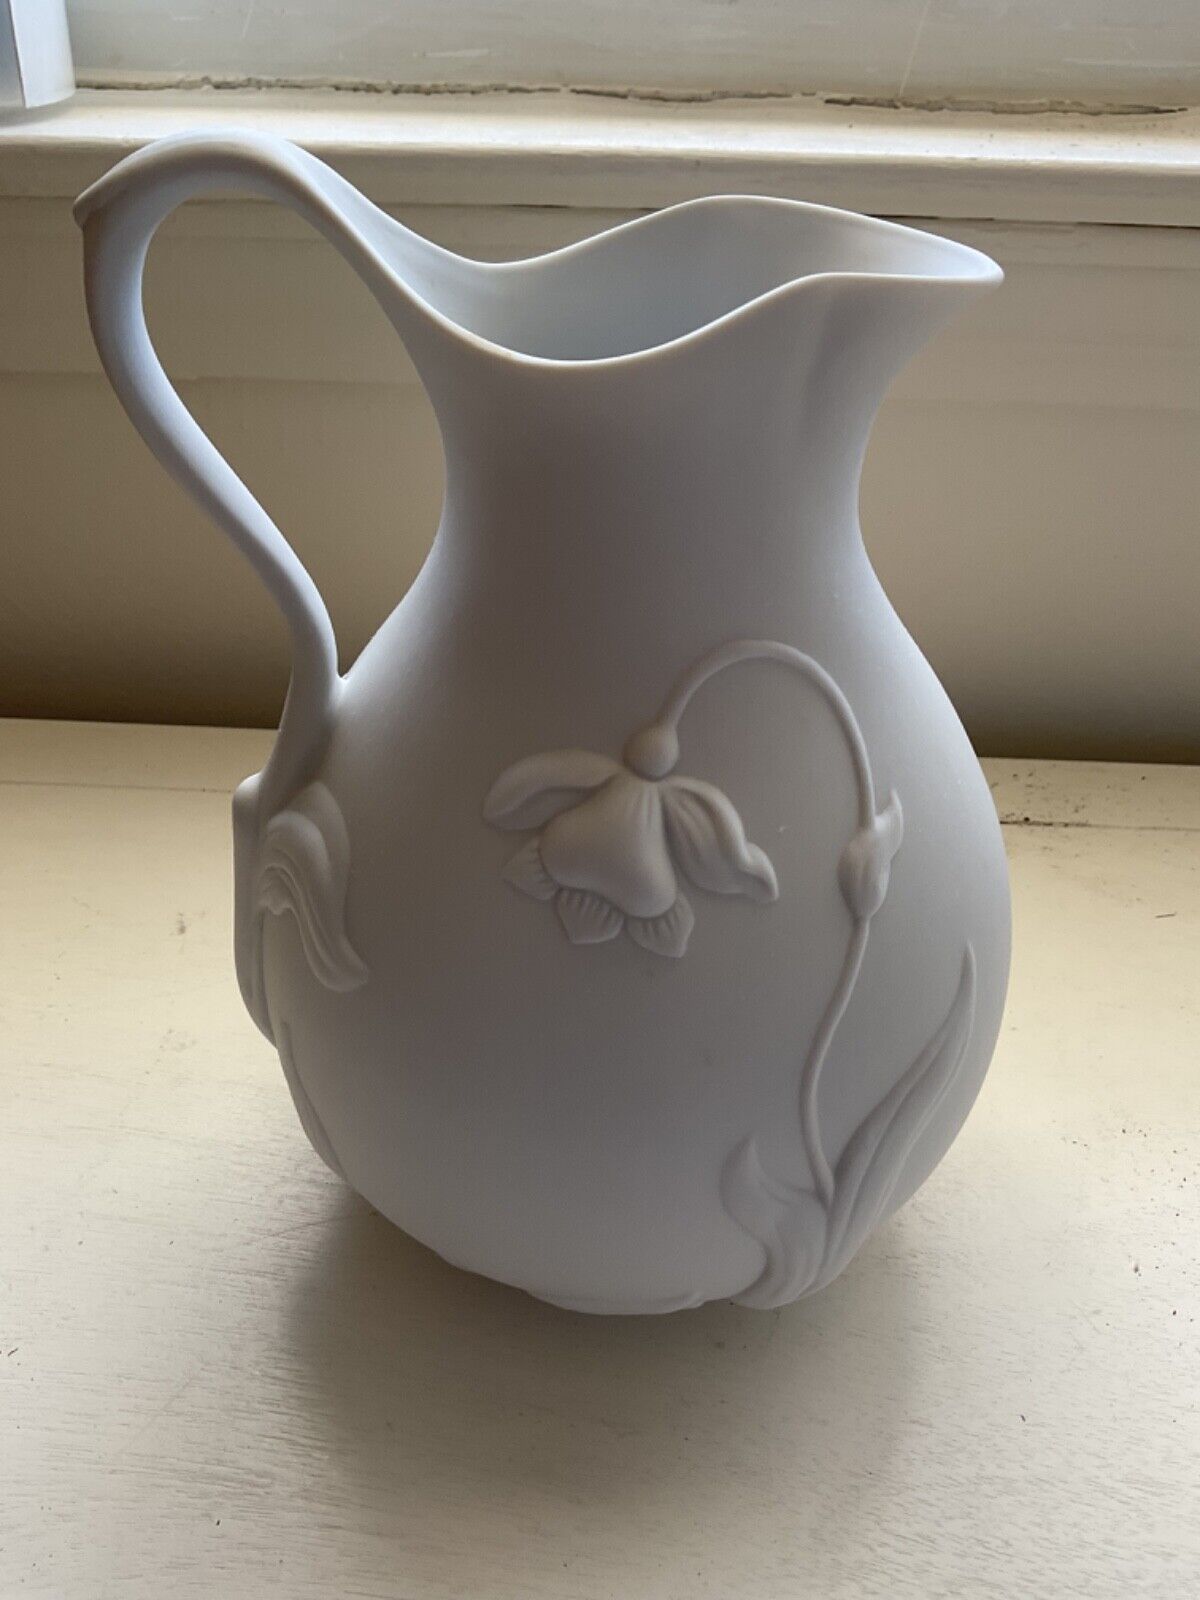 1993 Metropolitan Museum of Art white bisque  porcelain pitcher